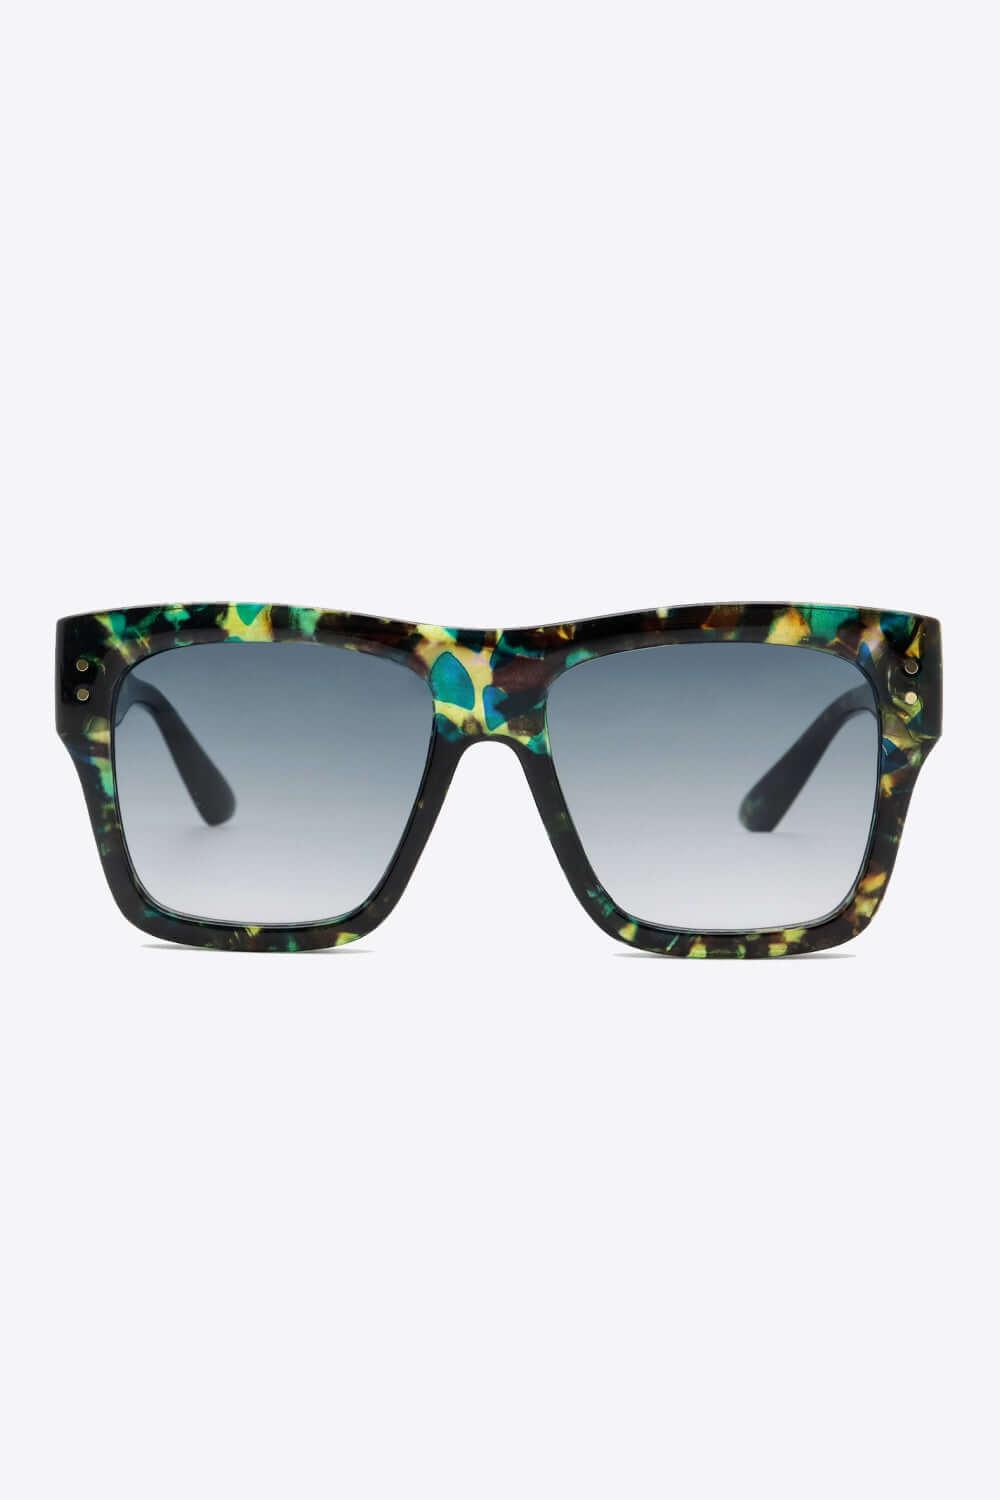 Comfort UV400 Patterned Polycarbonate Square Sunglasses